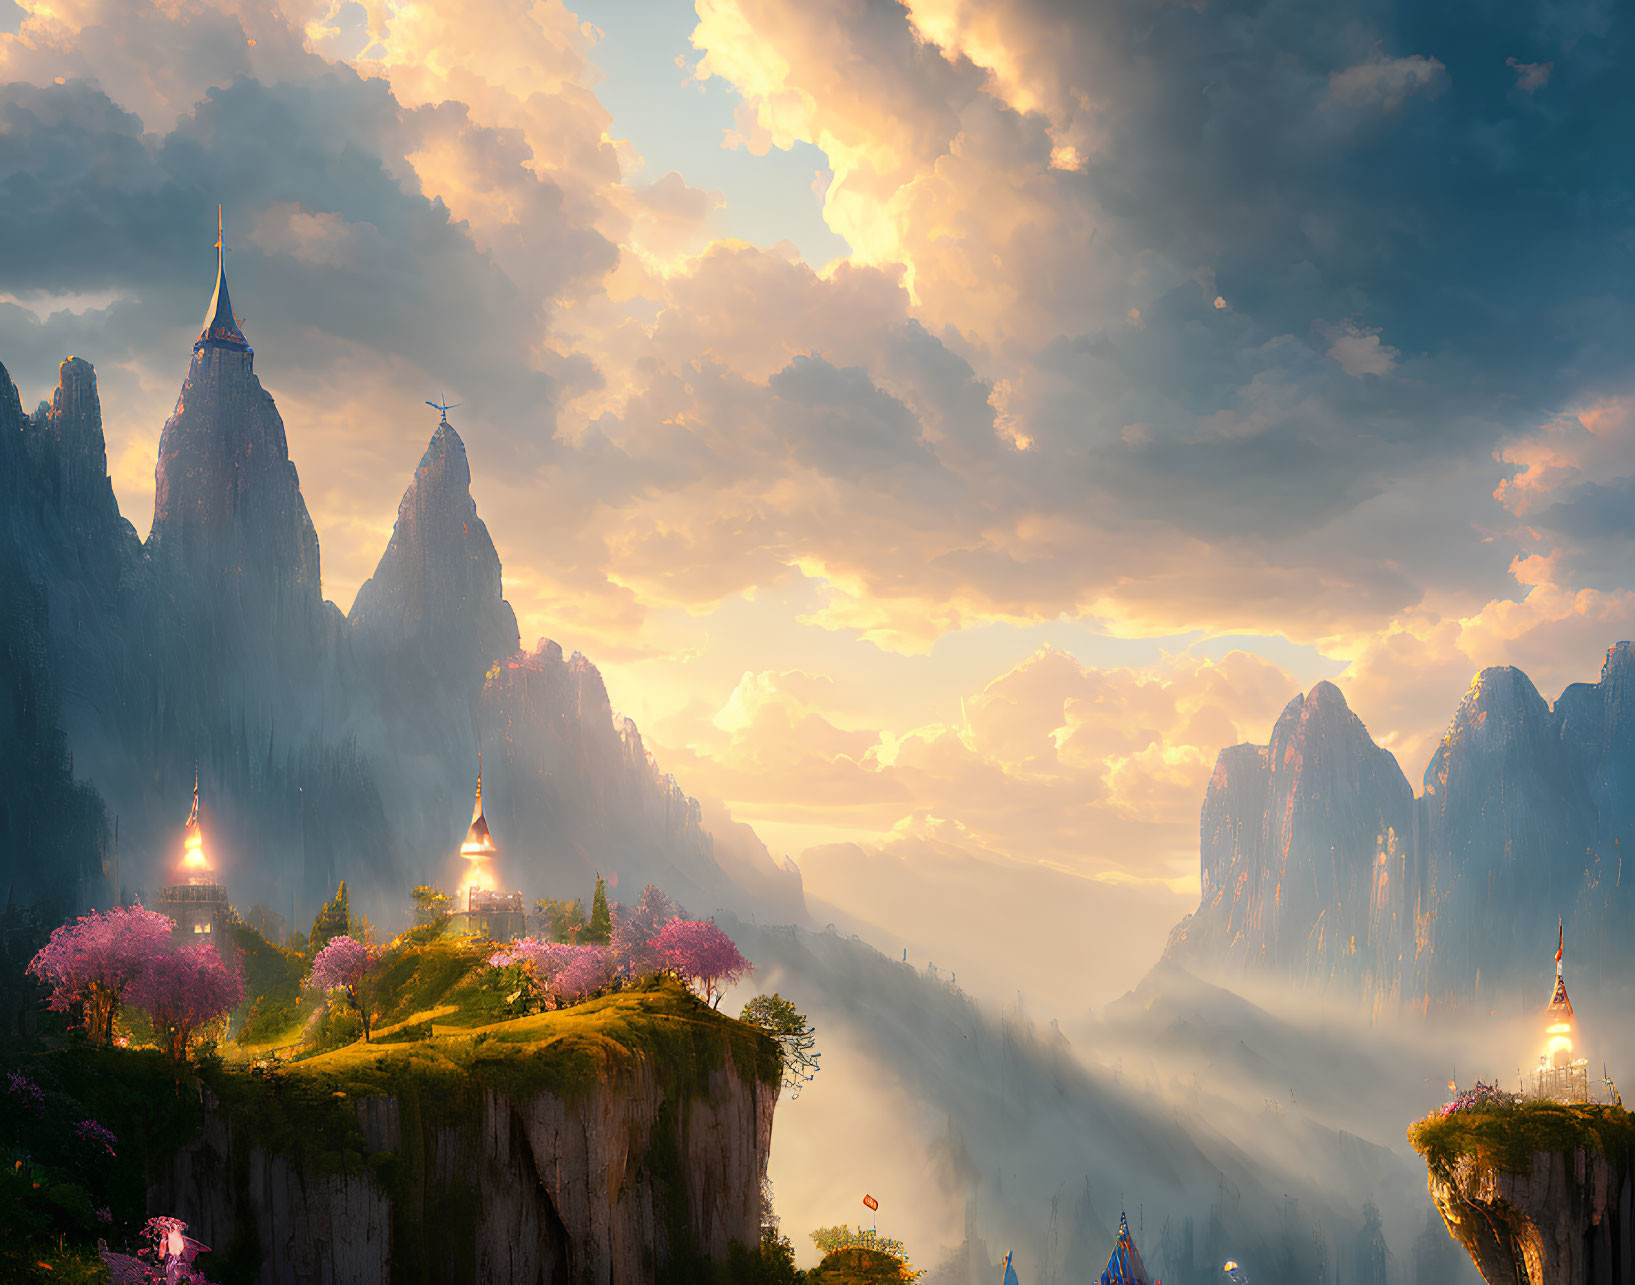 Fantasy landscape: sunrise, towering cliffs, castles, pink trees, warm cloudy sky